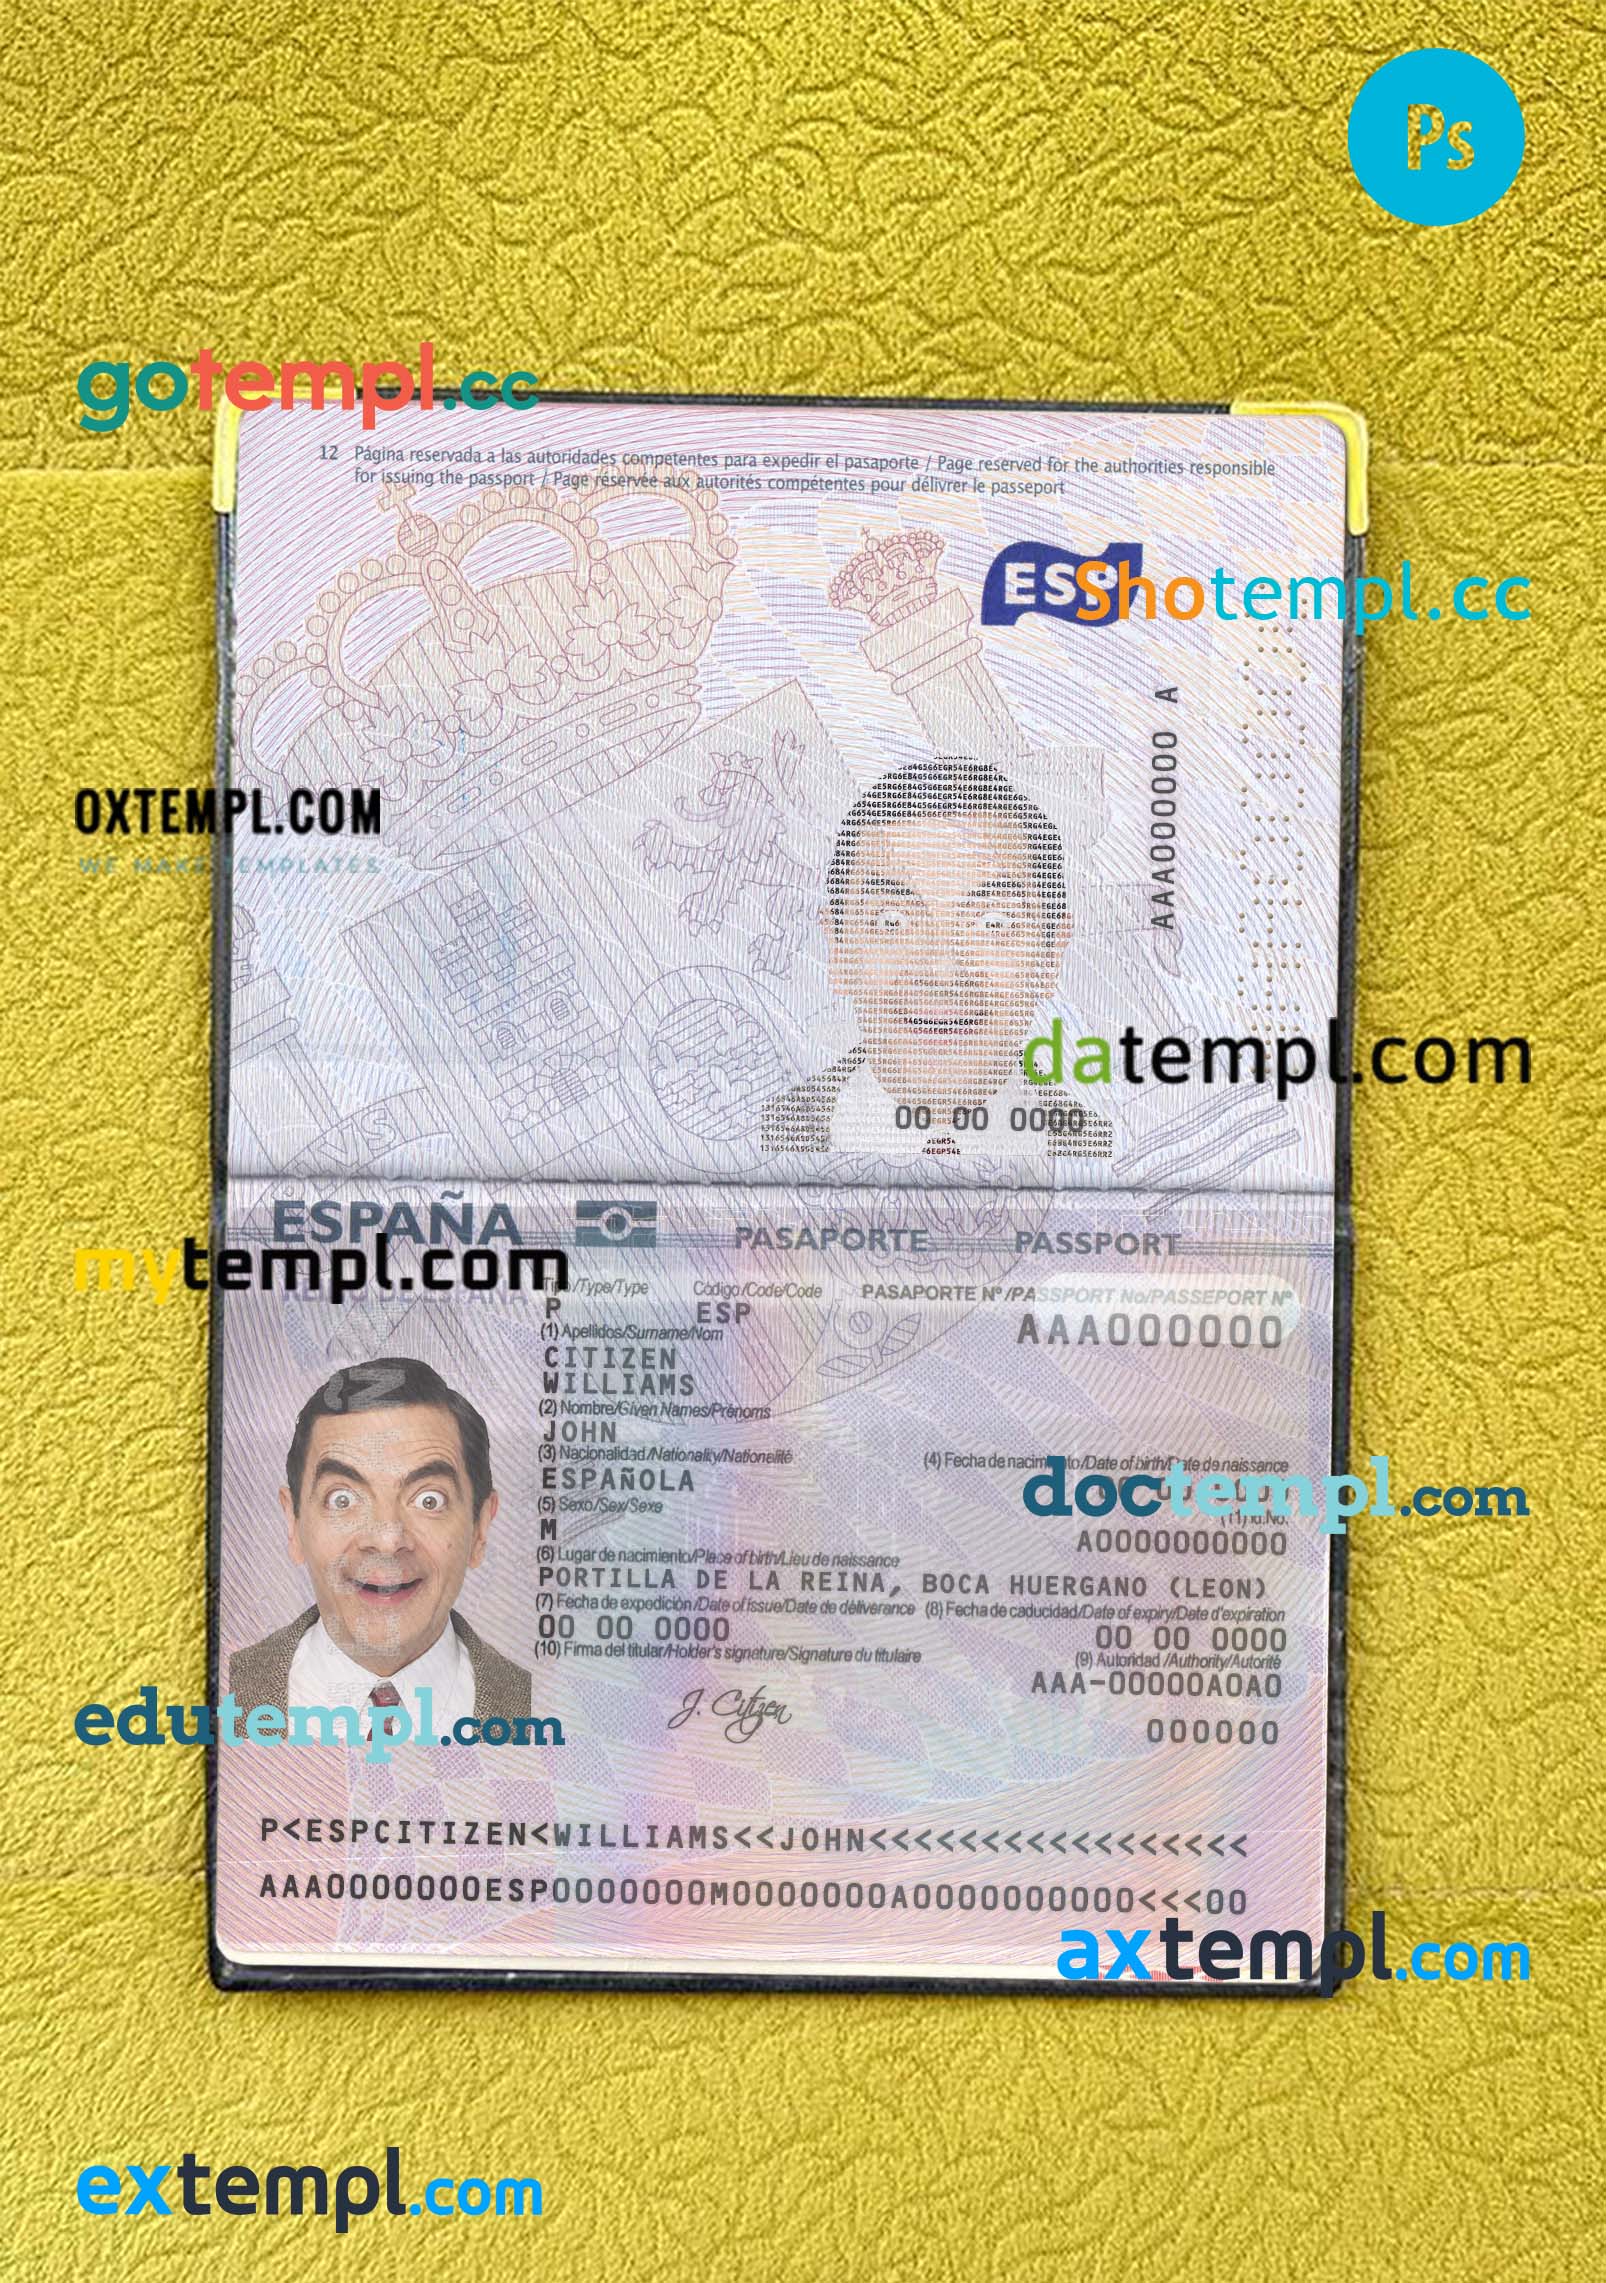 Ukraine passport editable PSD files, scan and photo taken image (2015-present), 2 in 1